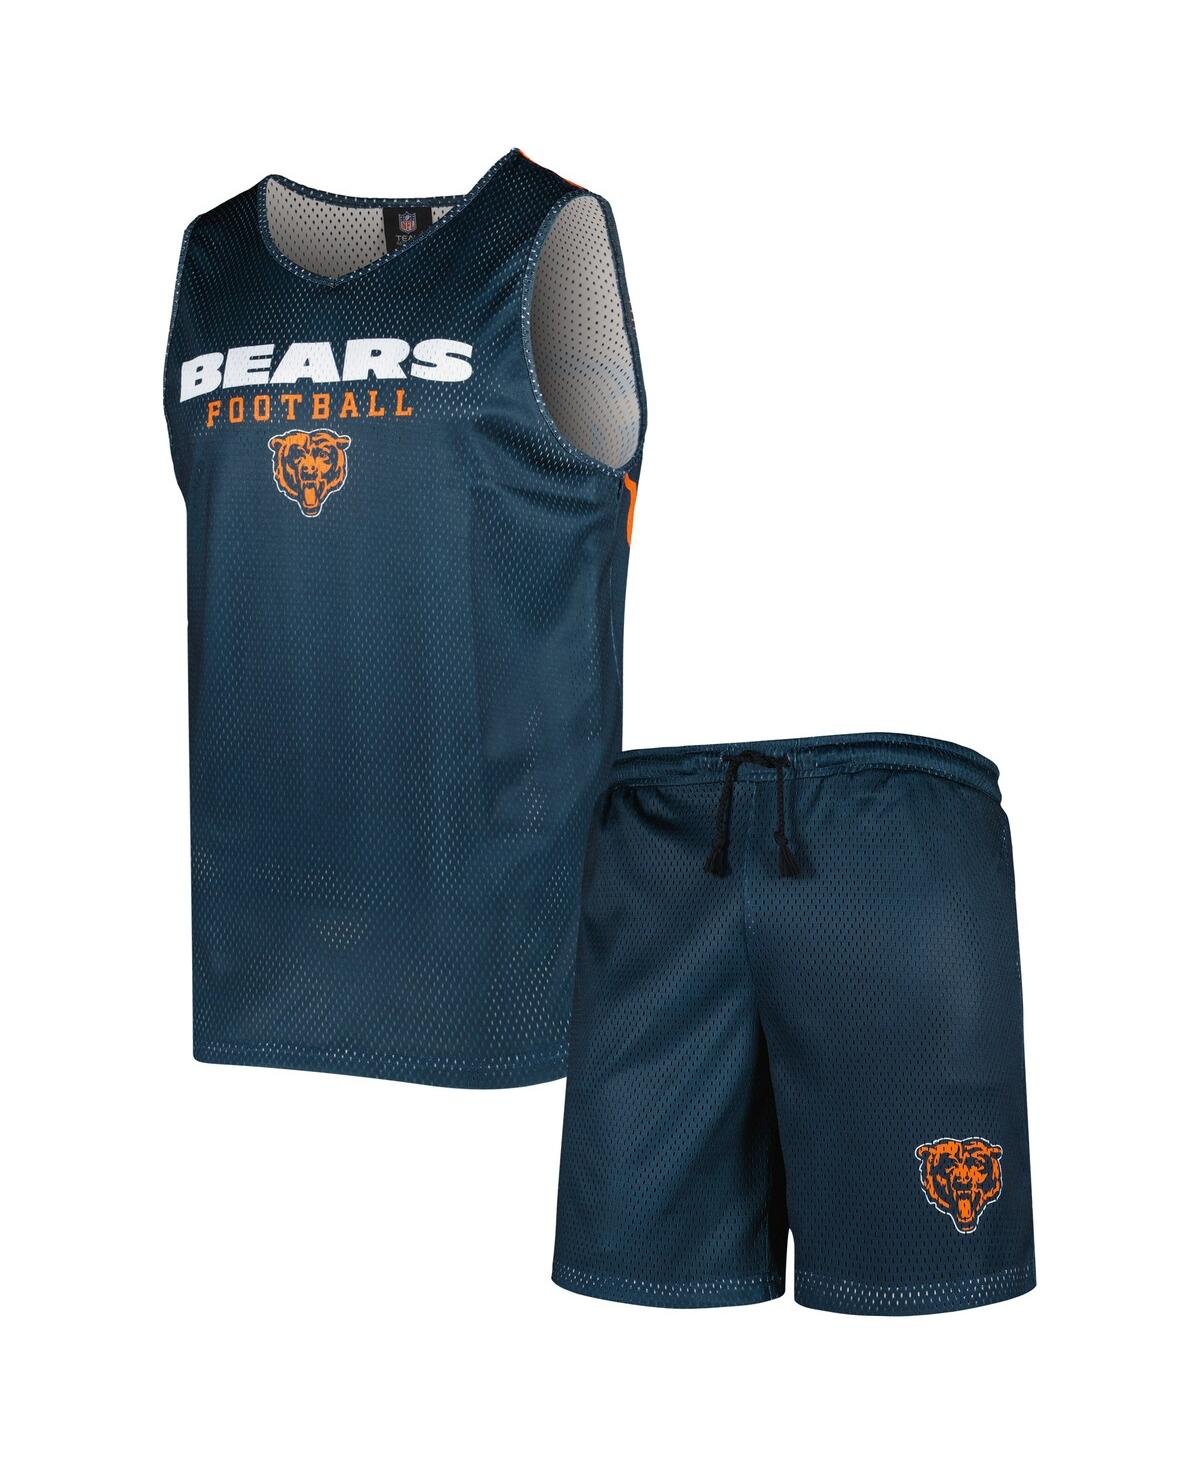 Men's Foco Navy Chicago Bears Colorblock Mesh V-Neck and Shorts Set - Navy